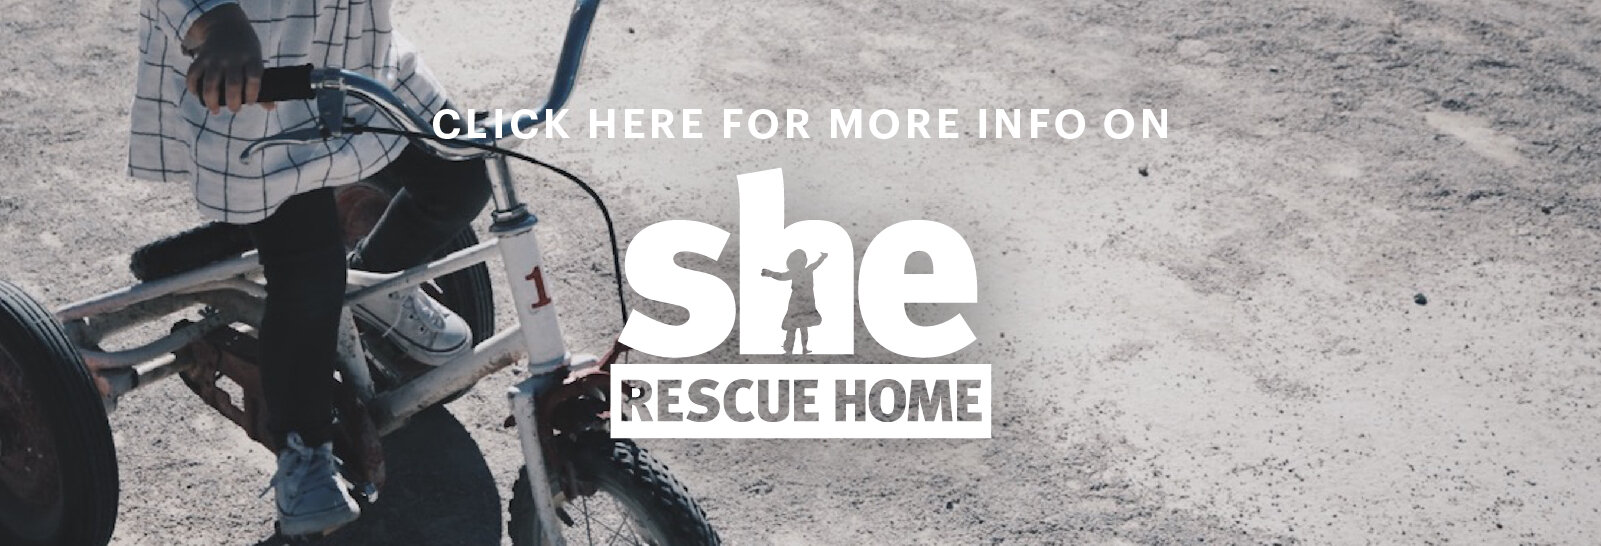 1-she rescue.jpg